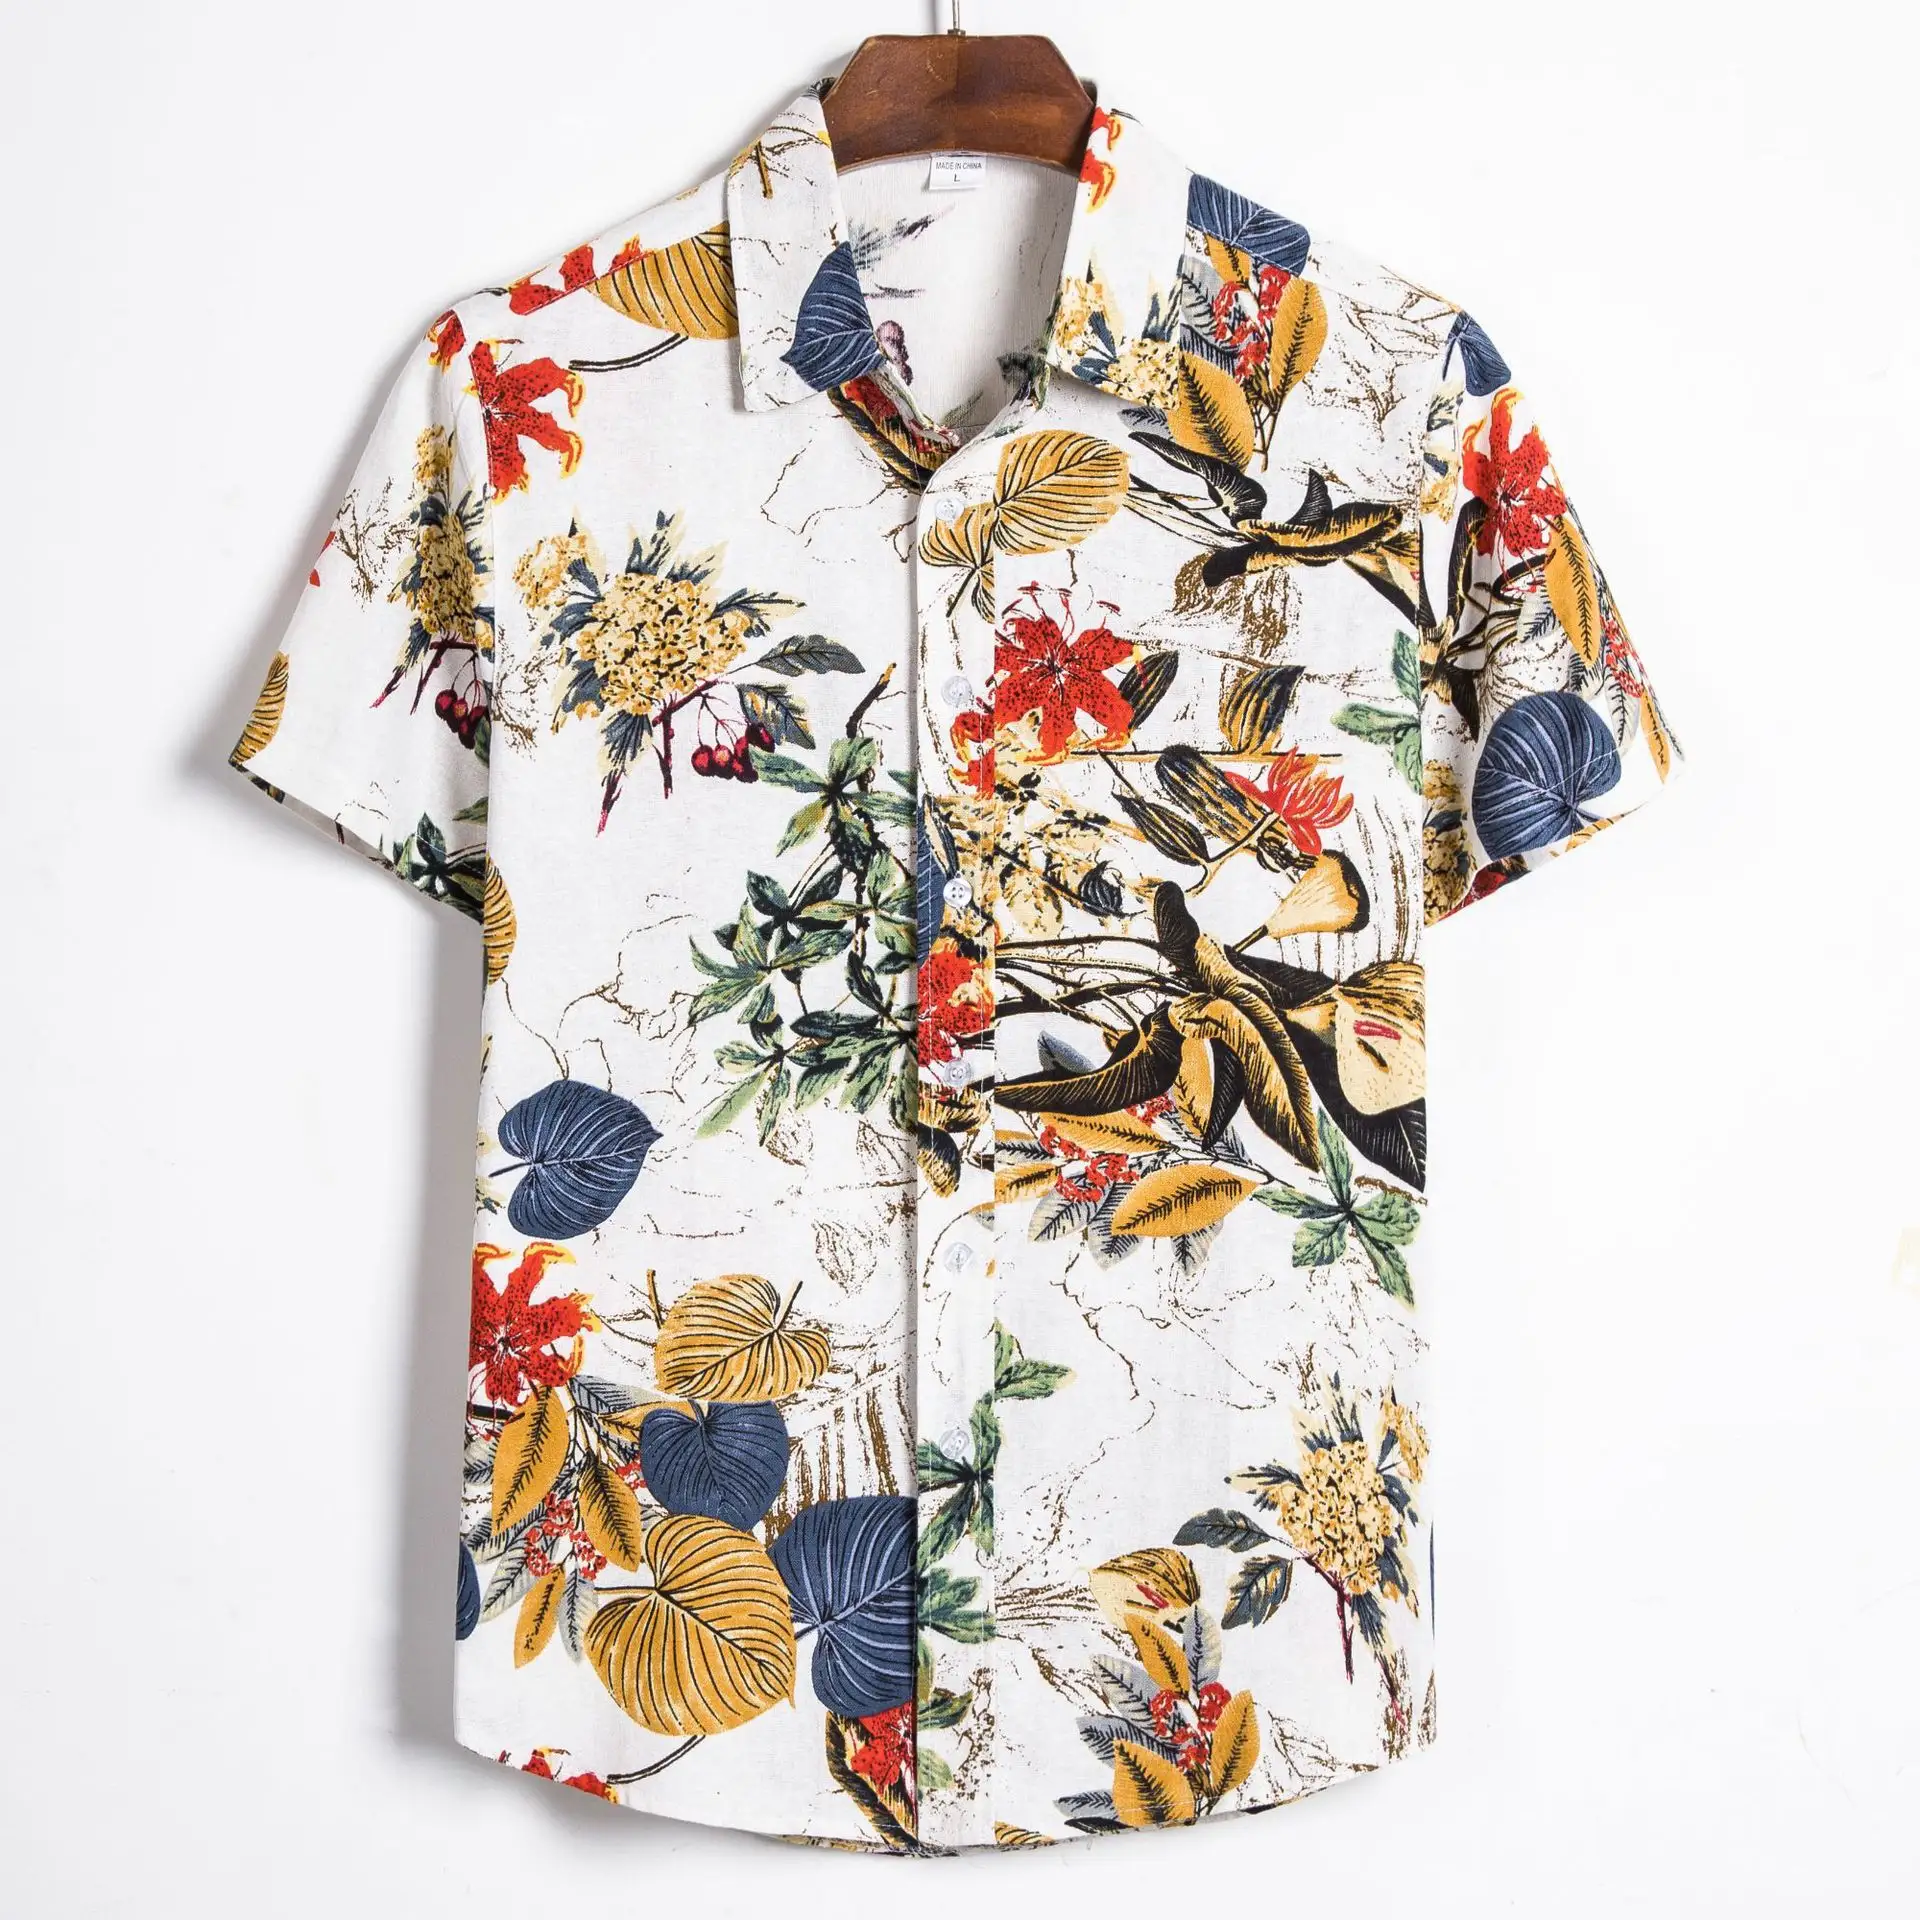 Large size new men's short-sleeved shirt Popular Japanese Printed Boy's Top Summer Hawaiian floral loose beach shirts